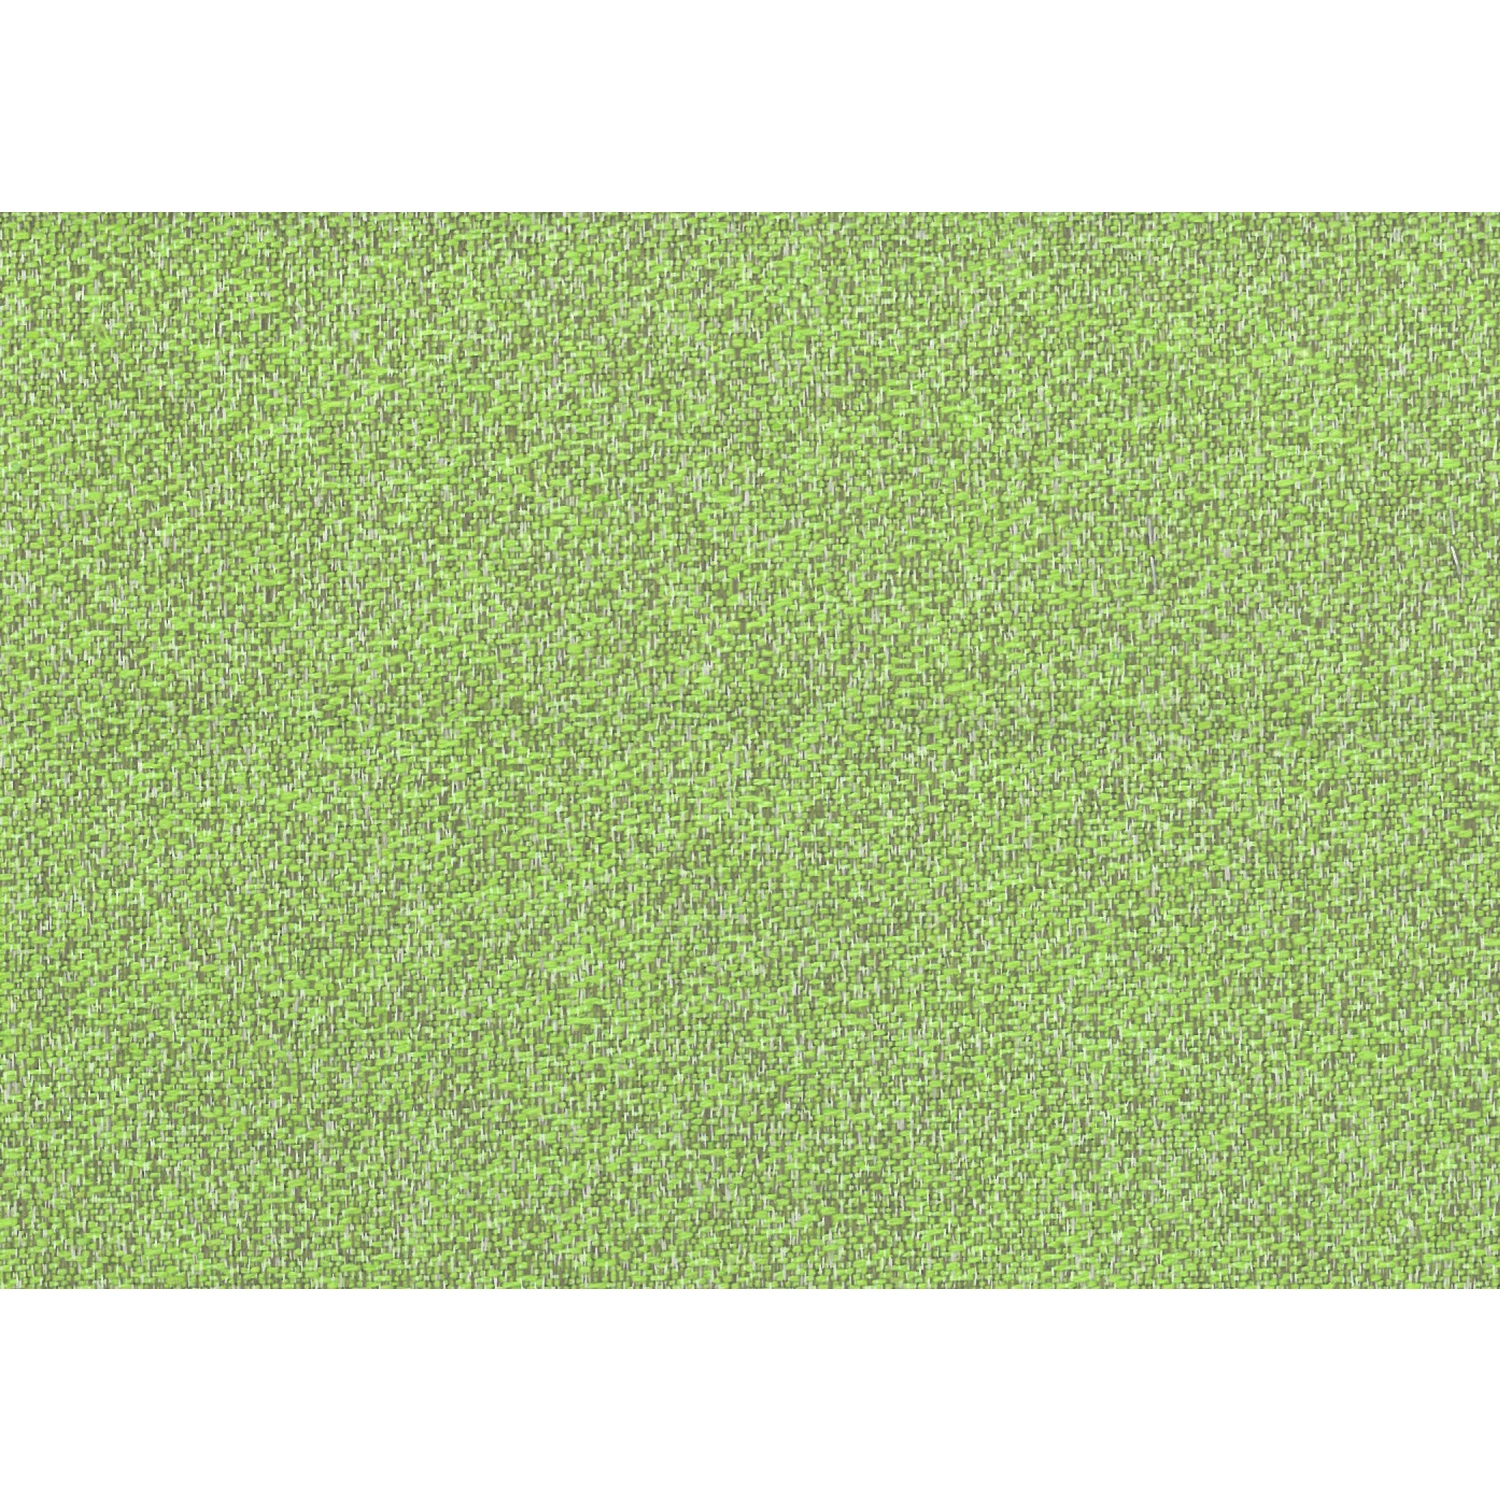 BEST Sesselauflage »Soft-Line«, grün, BxL: x cm 50 120